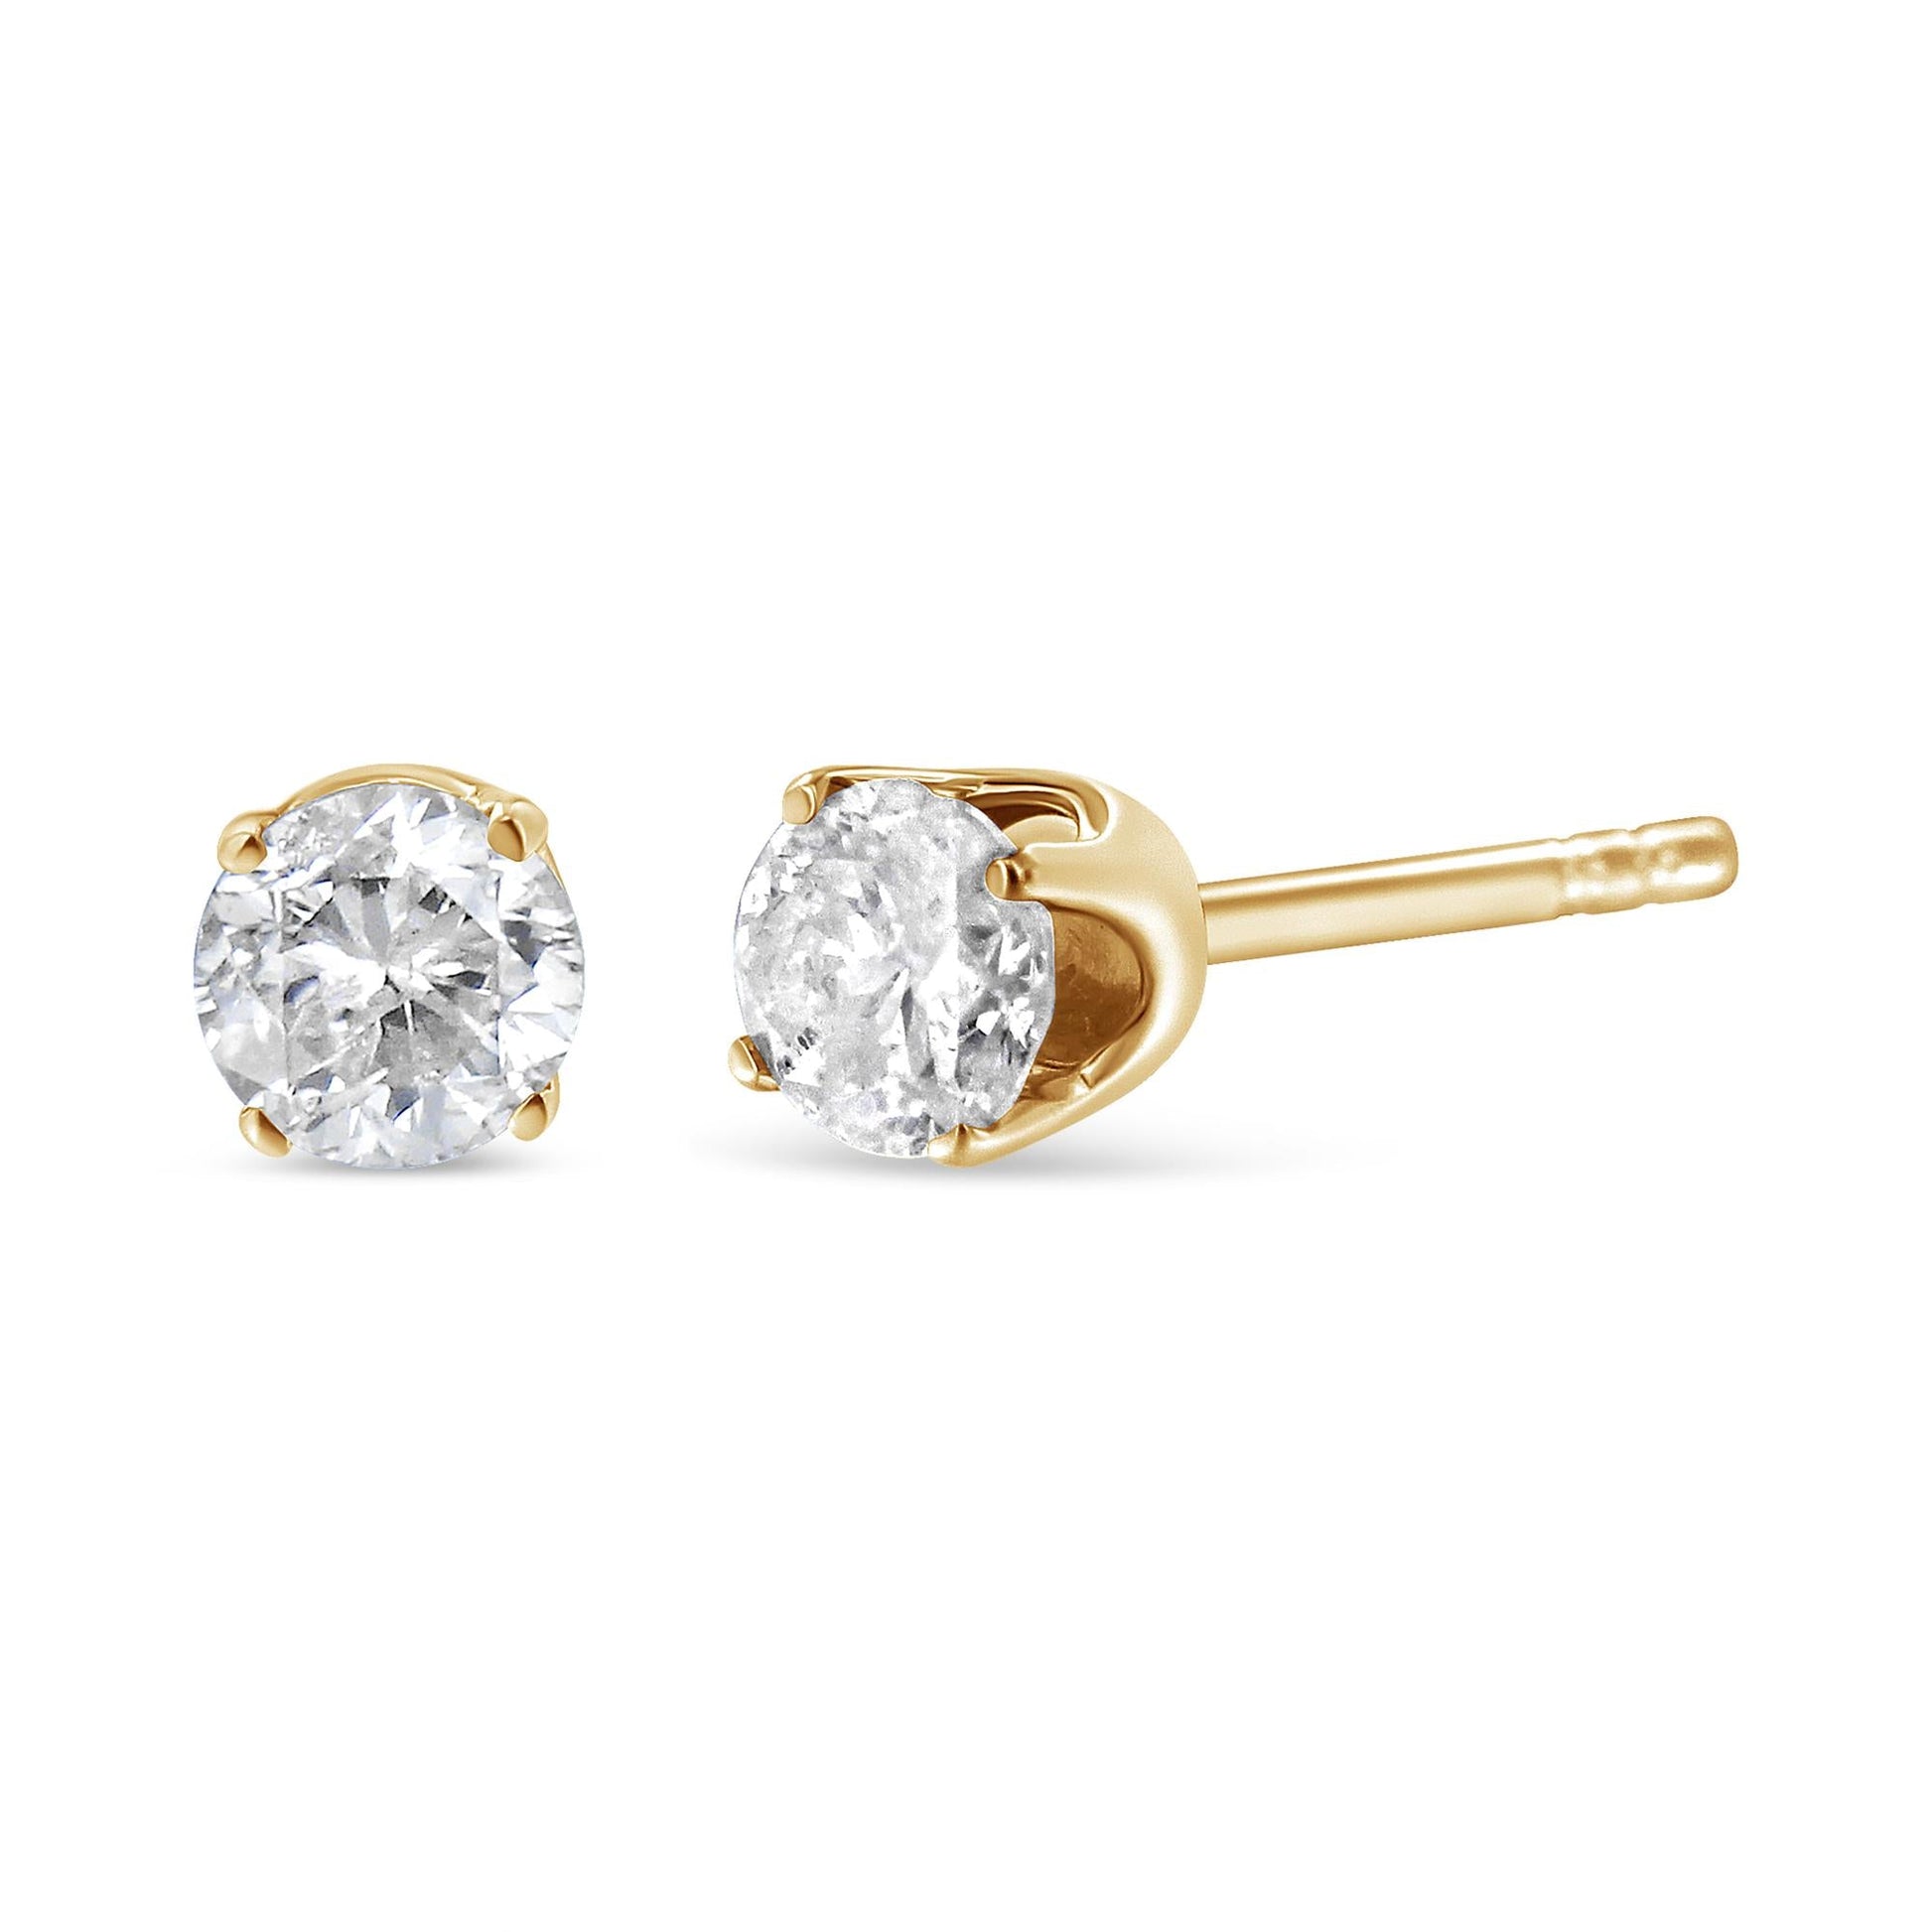 14K White Gold 4 Prong Screw Post & Backs 1/2CTTW Round Cut Diamond Stud  Earrings